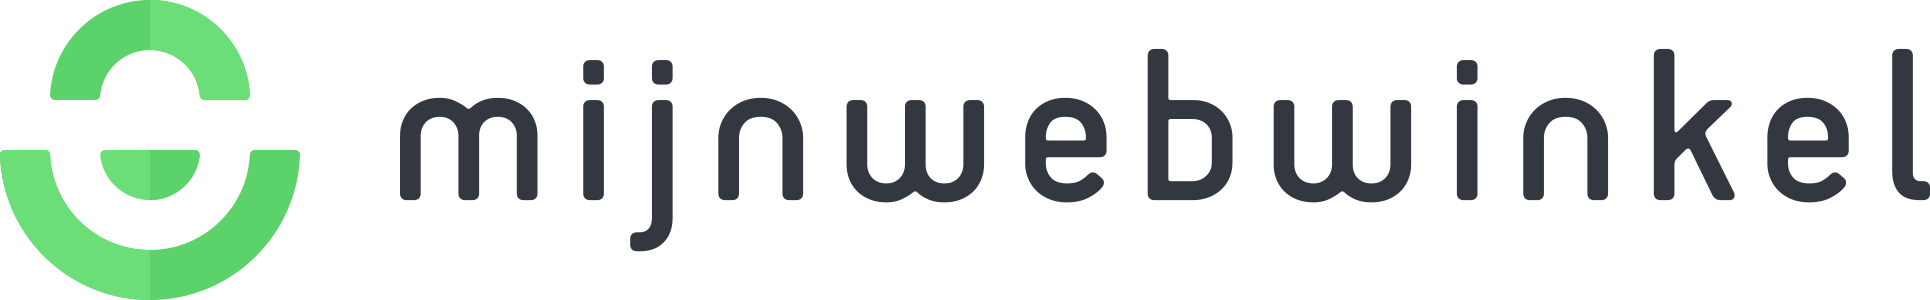 Logo-Mijnwebwinkel.png